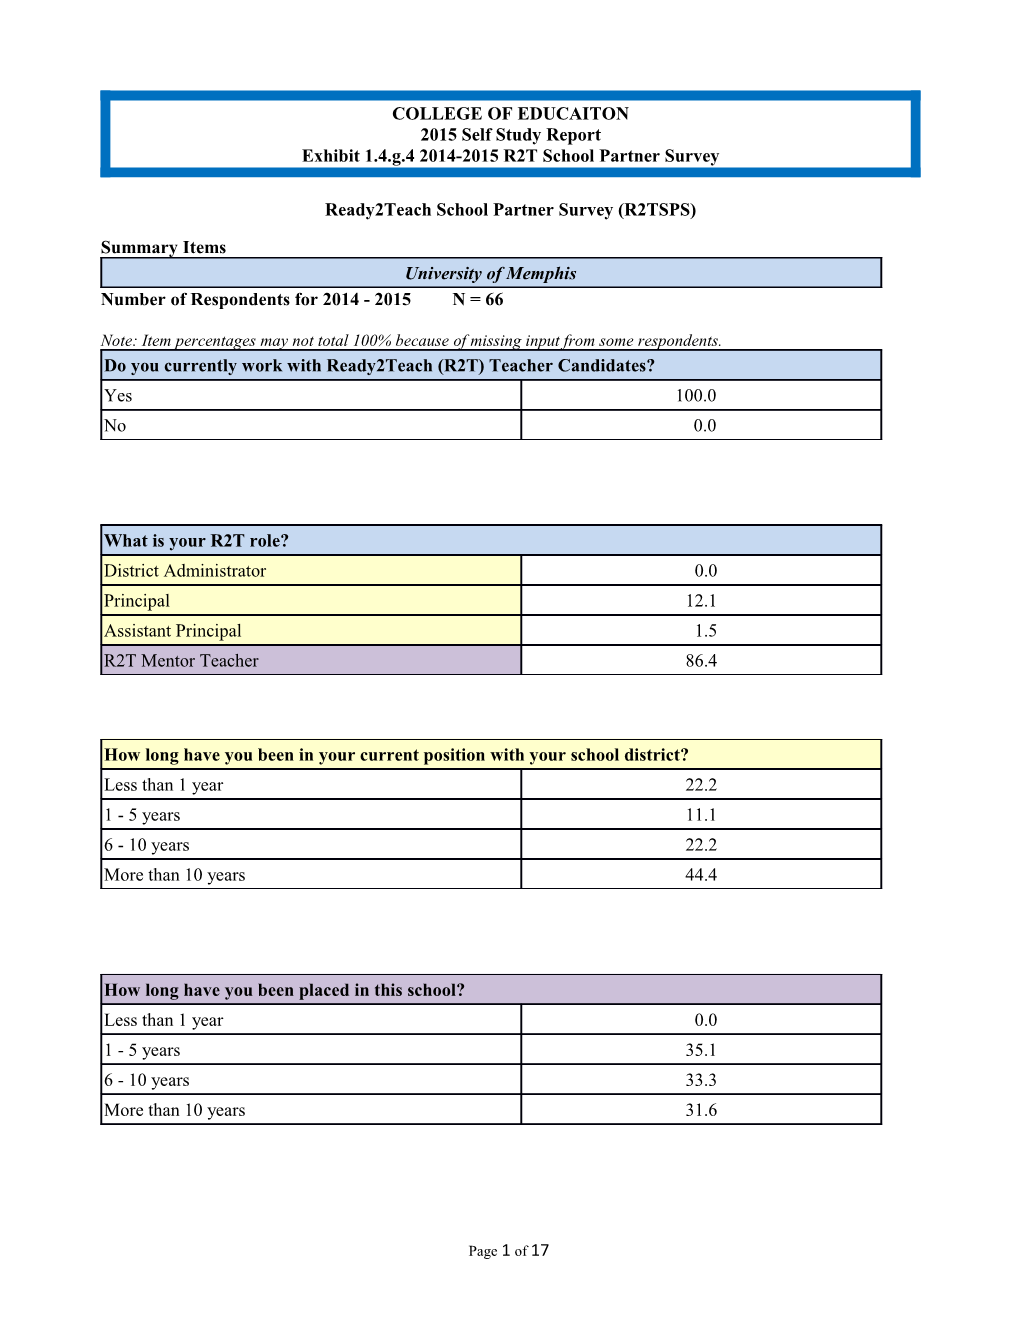 Exhibit 1.4.G.4 2014-2015 R2T School Partner Survey